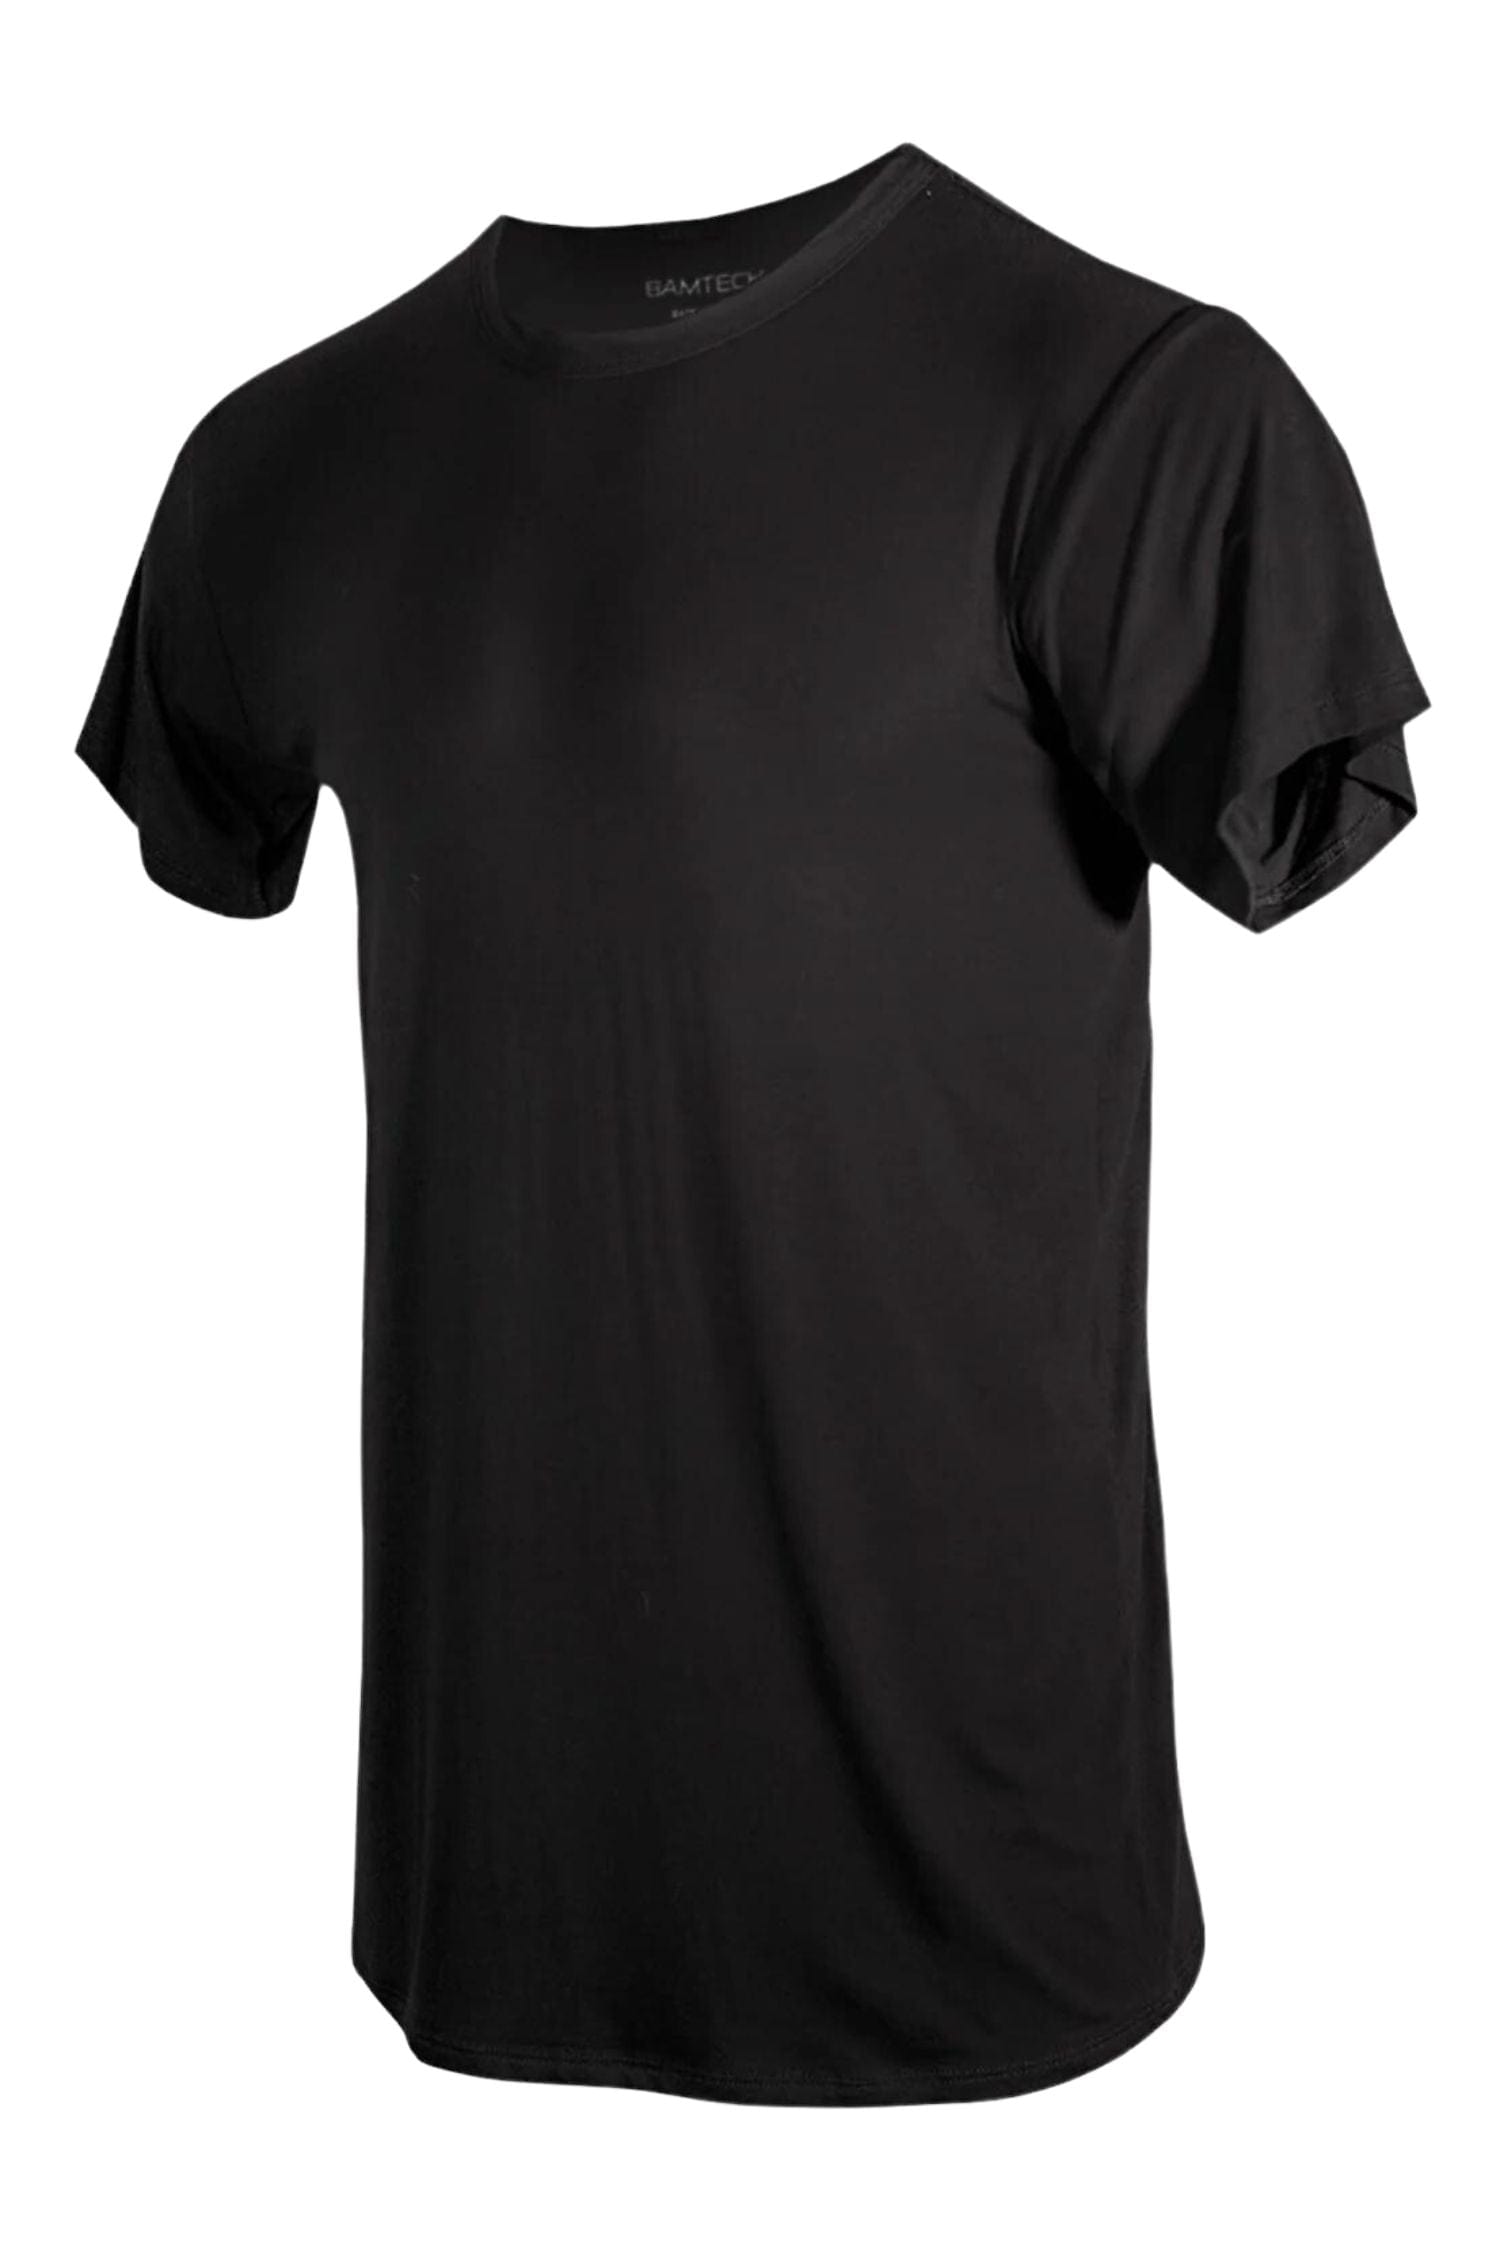 Bamboo Aerotech T-Shirt - Black